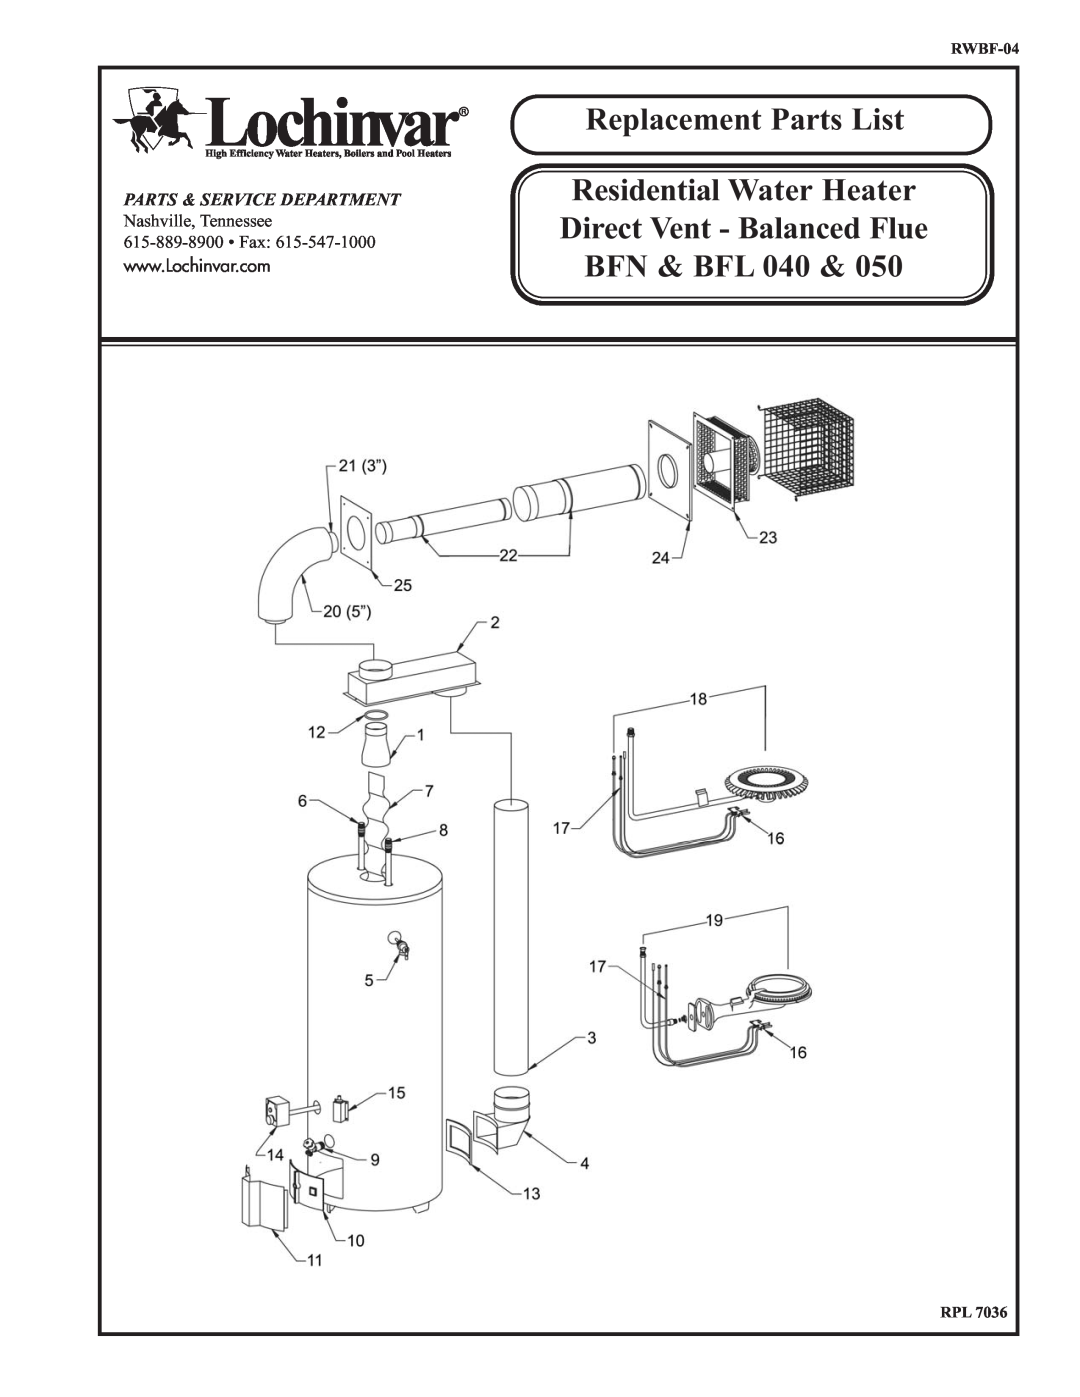 Lochinvar BFN 040 manual Replacement Parts List Residential Water Heater, Direct Vent - Balanced Flue BFN & BFL, RWBF-04 